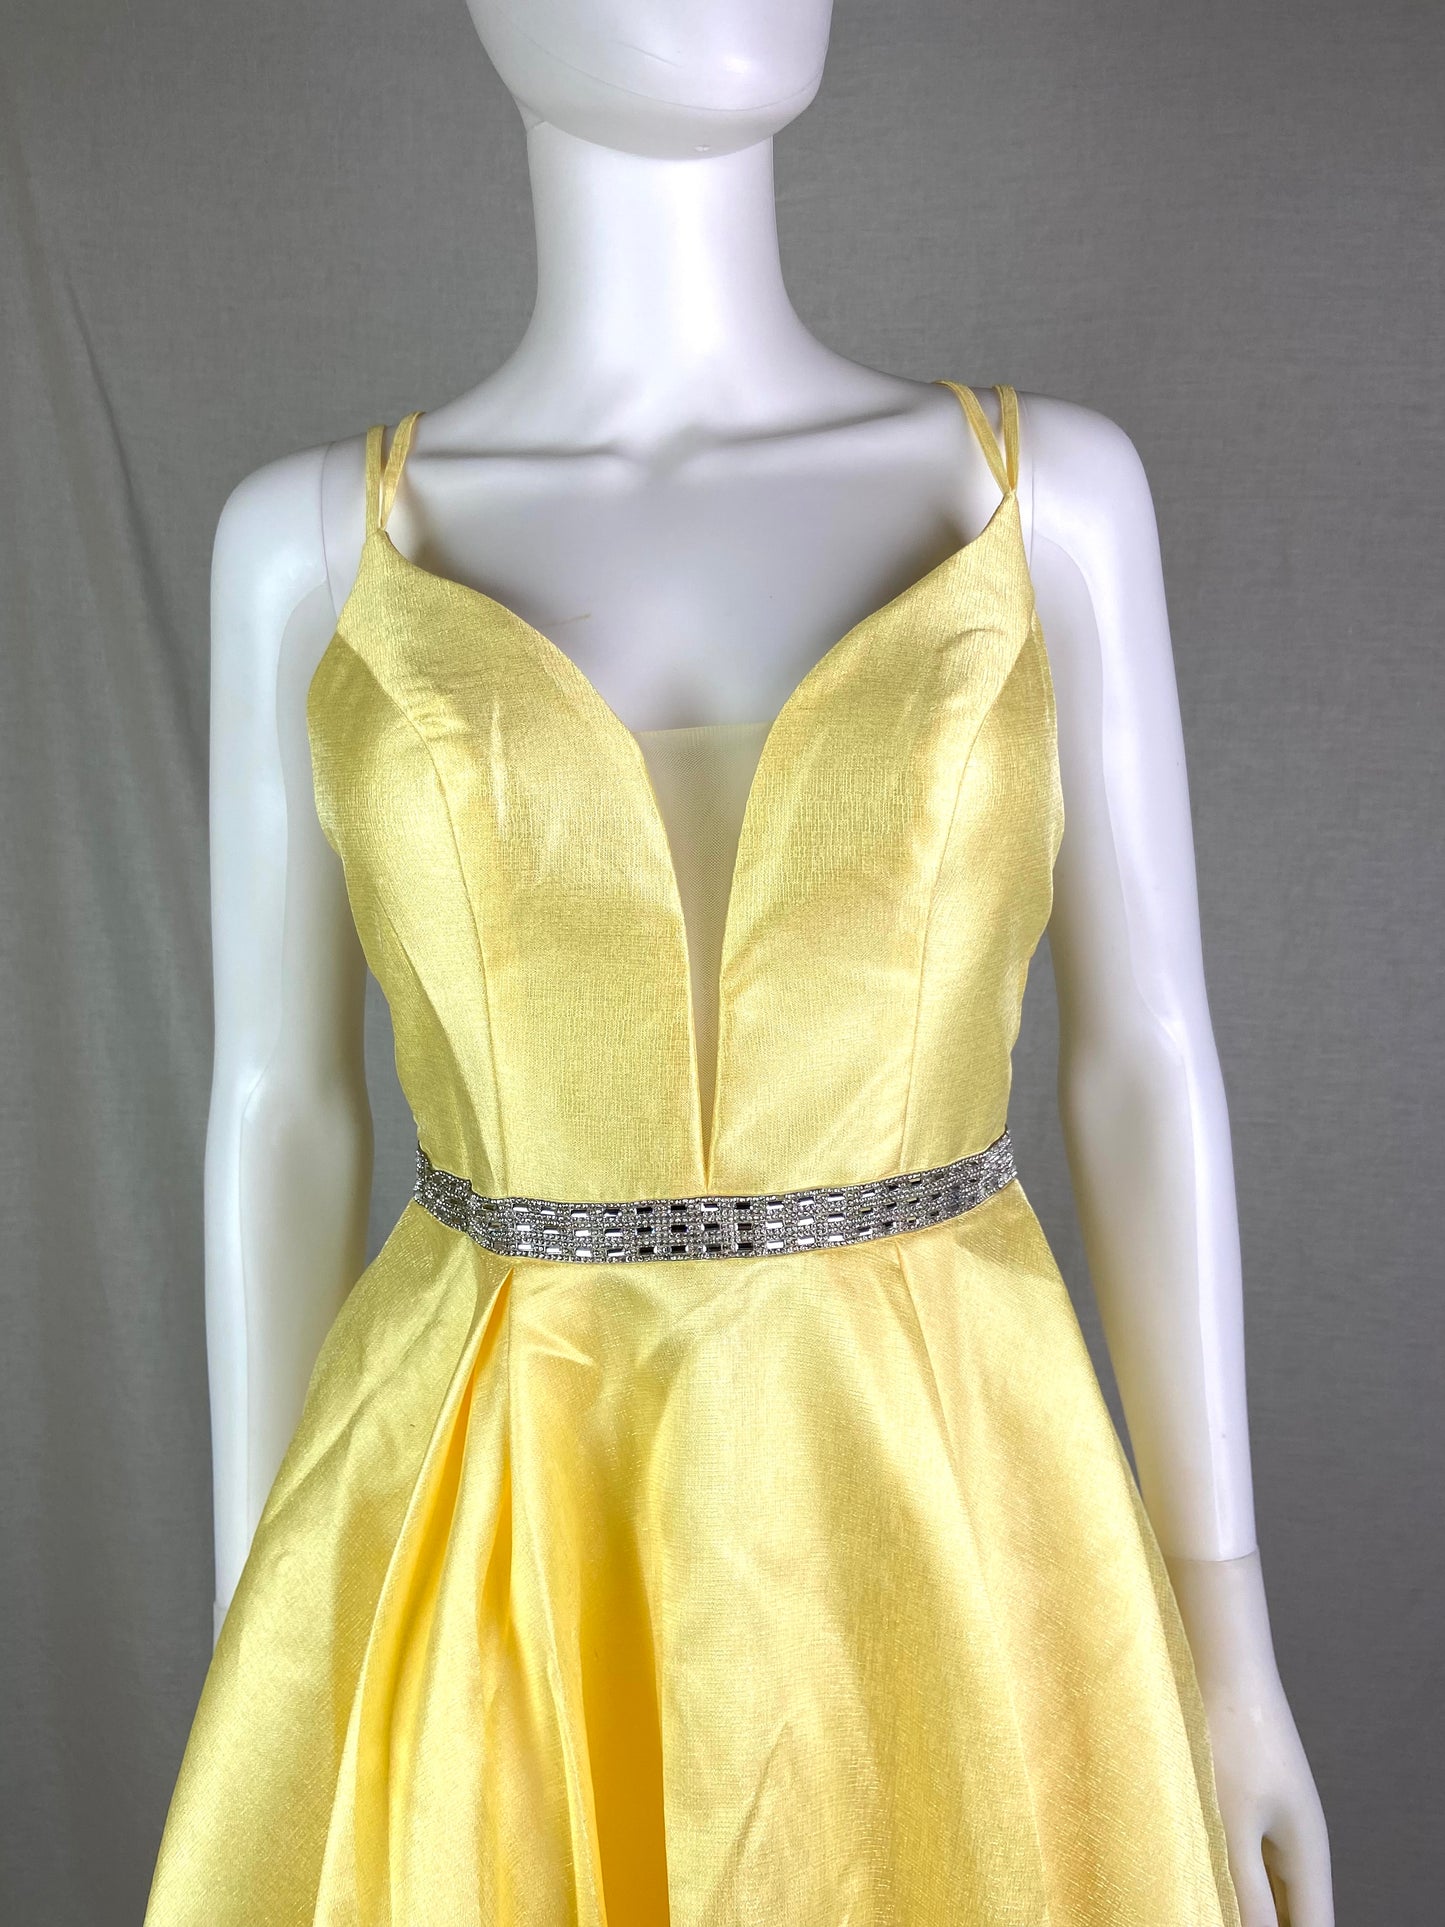 Vtg Promgirl Yellow Glitter Rhinestone Cocktail Dress